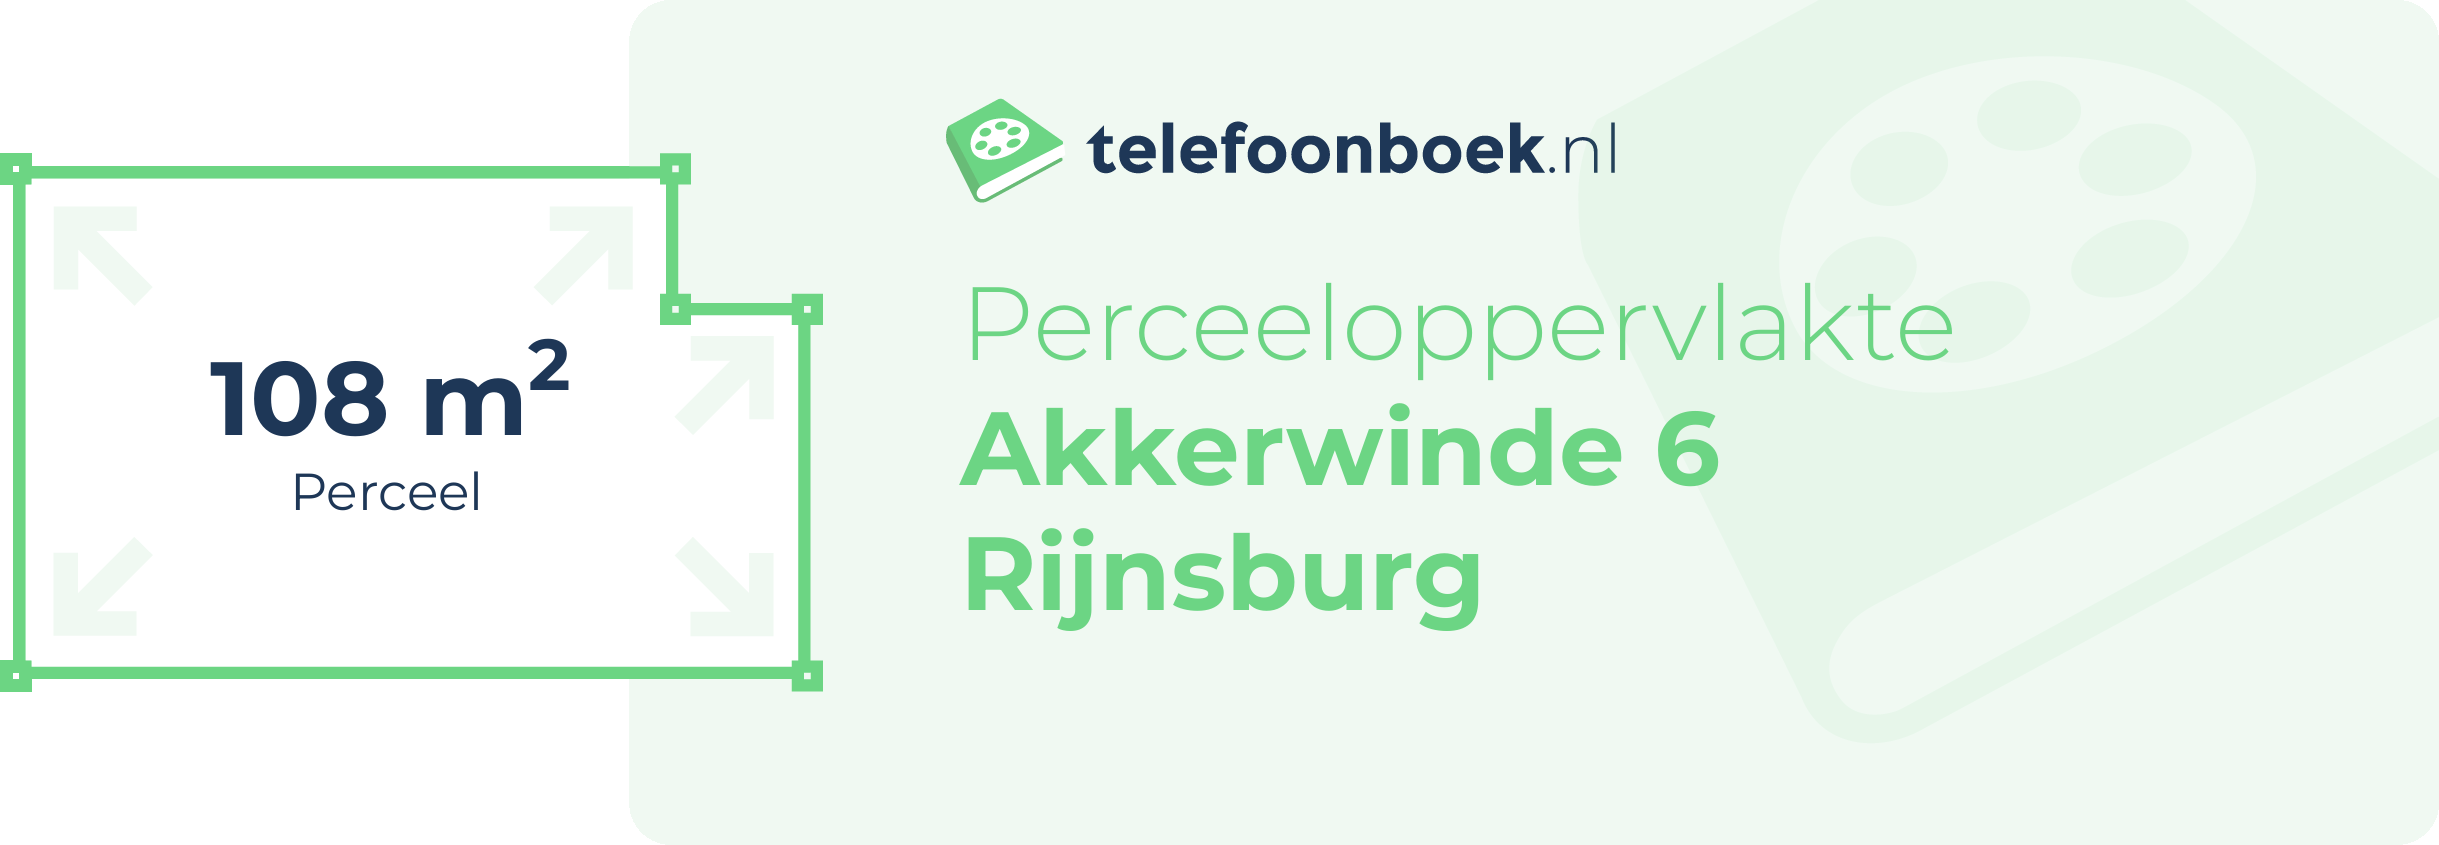 Perceeloppervlakte Akkerwinde 6 Rijnsburg